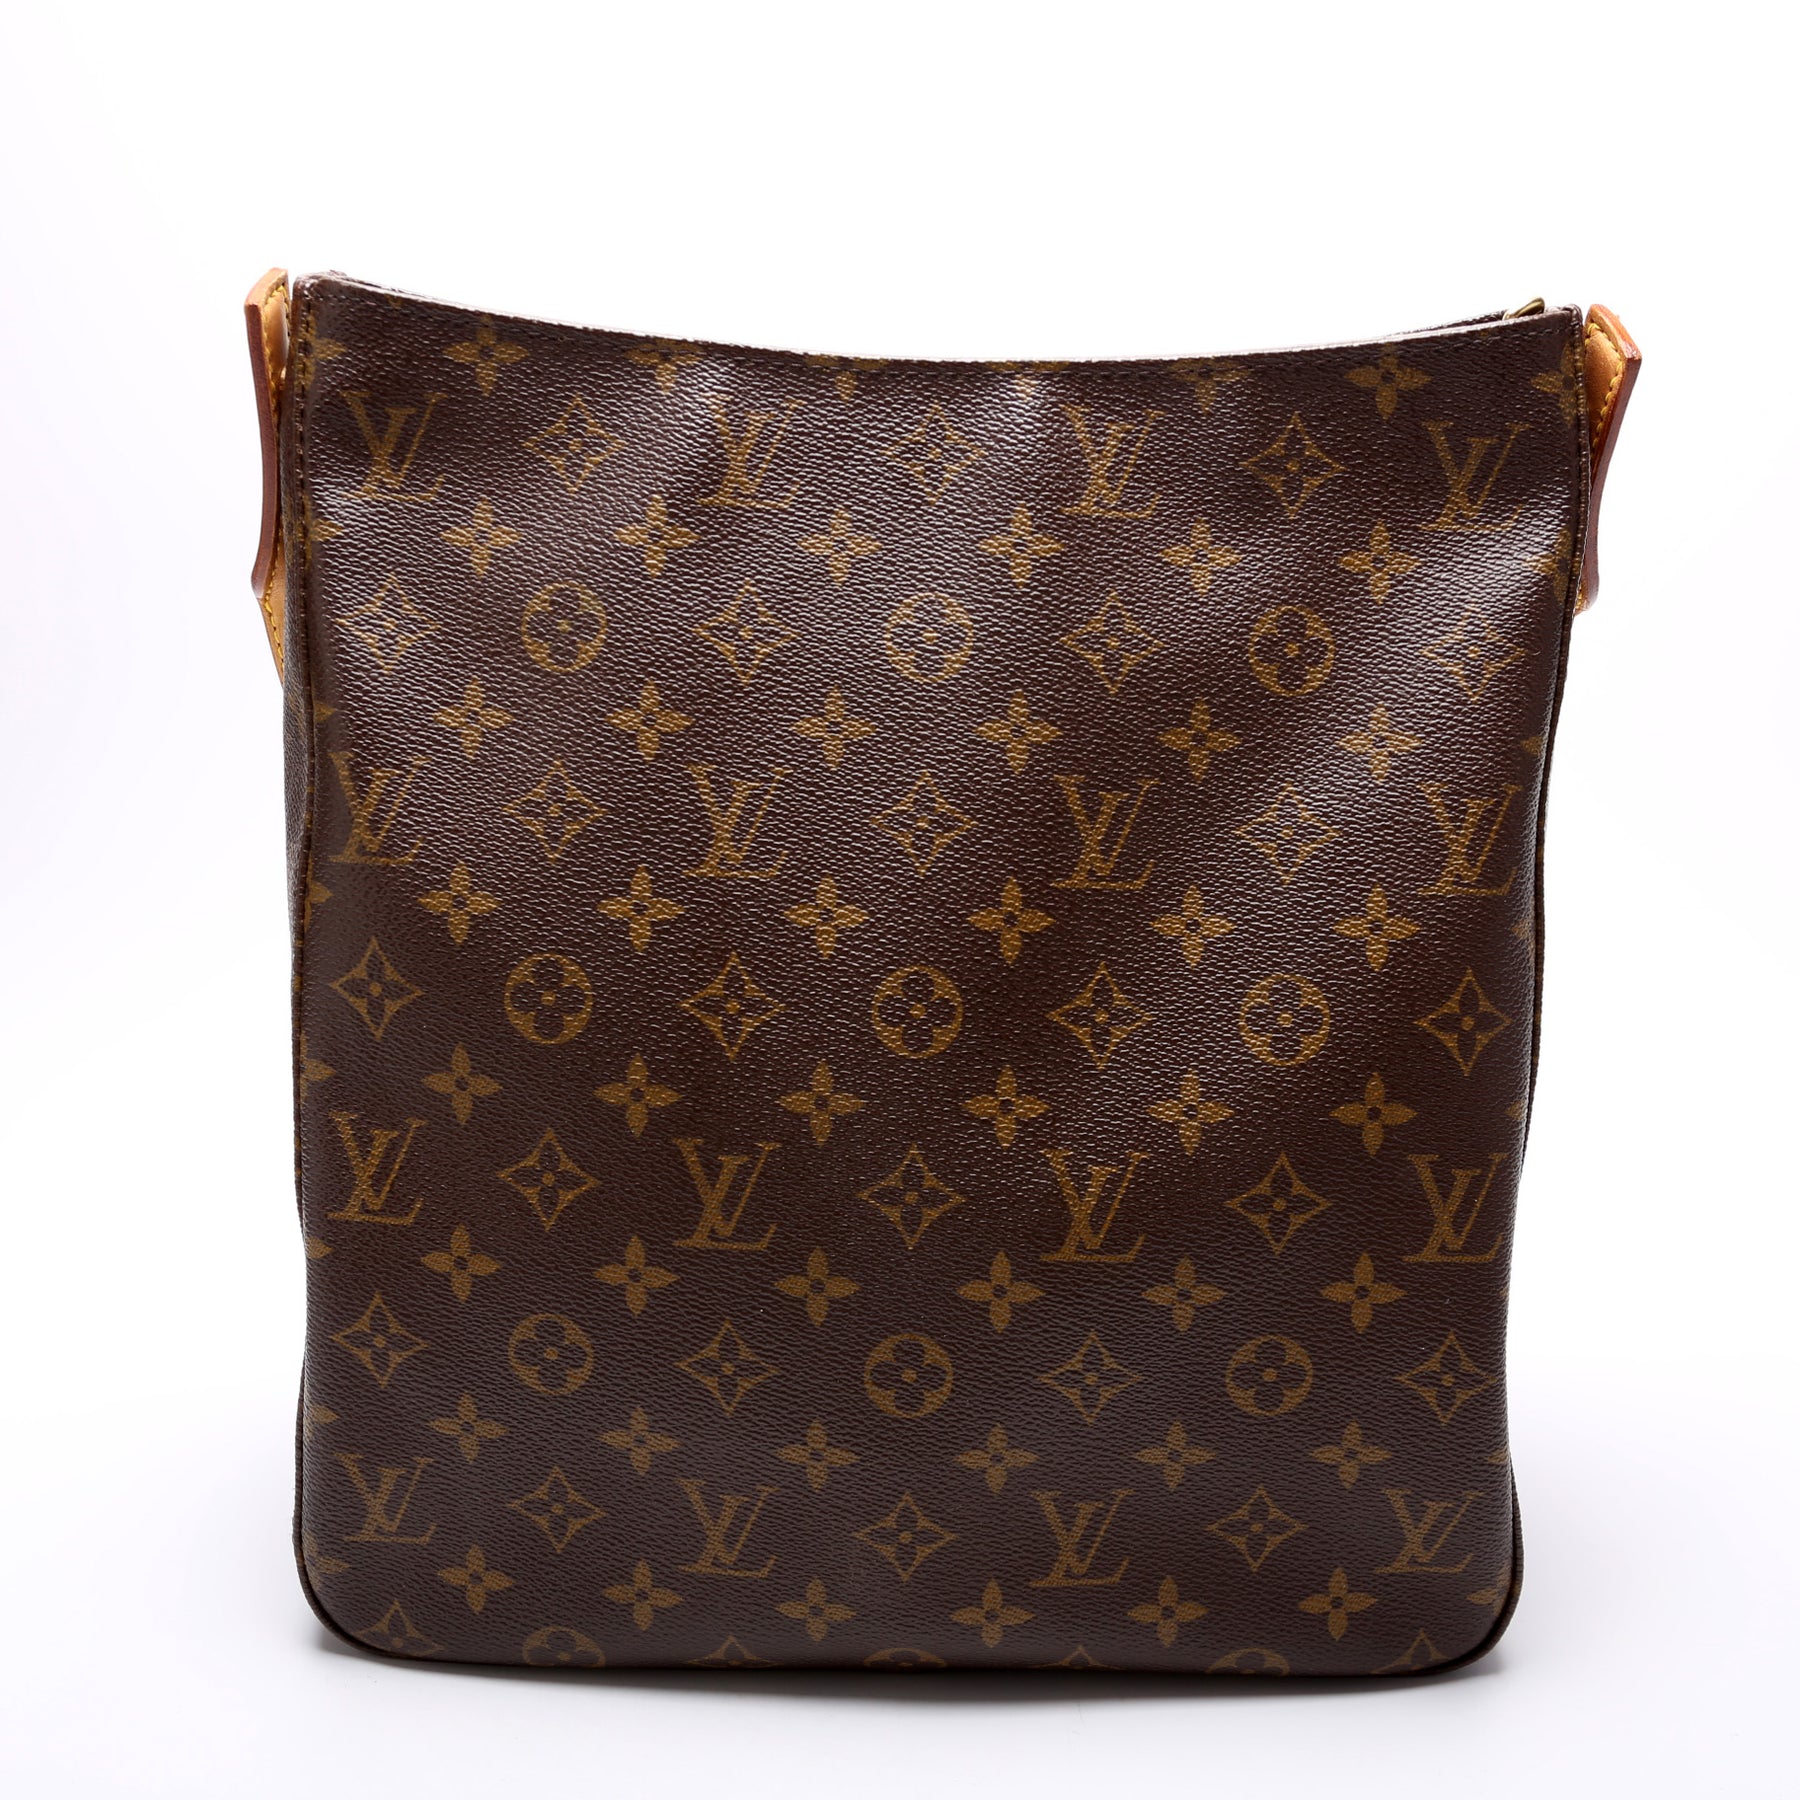 Louis Vuitton Monogram Canvas Looping Bag Purse GM Date Code